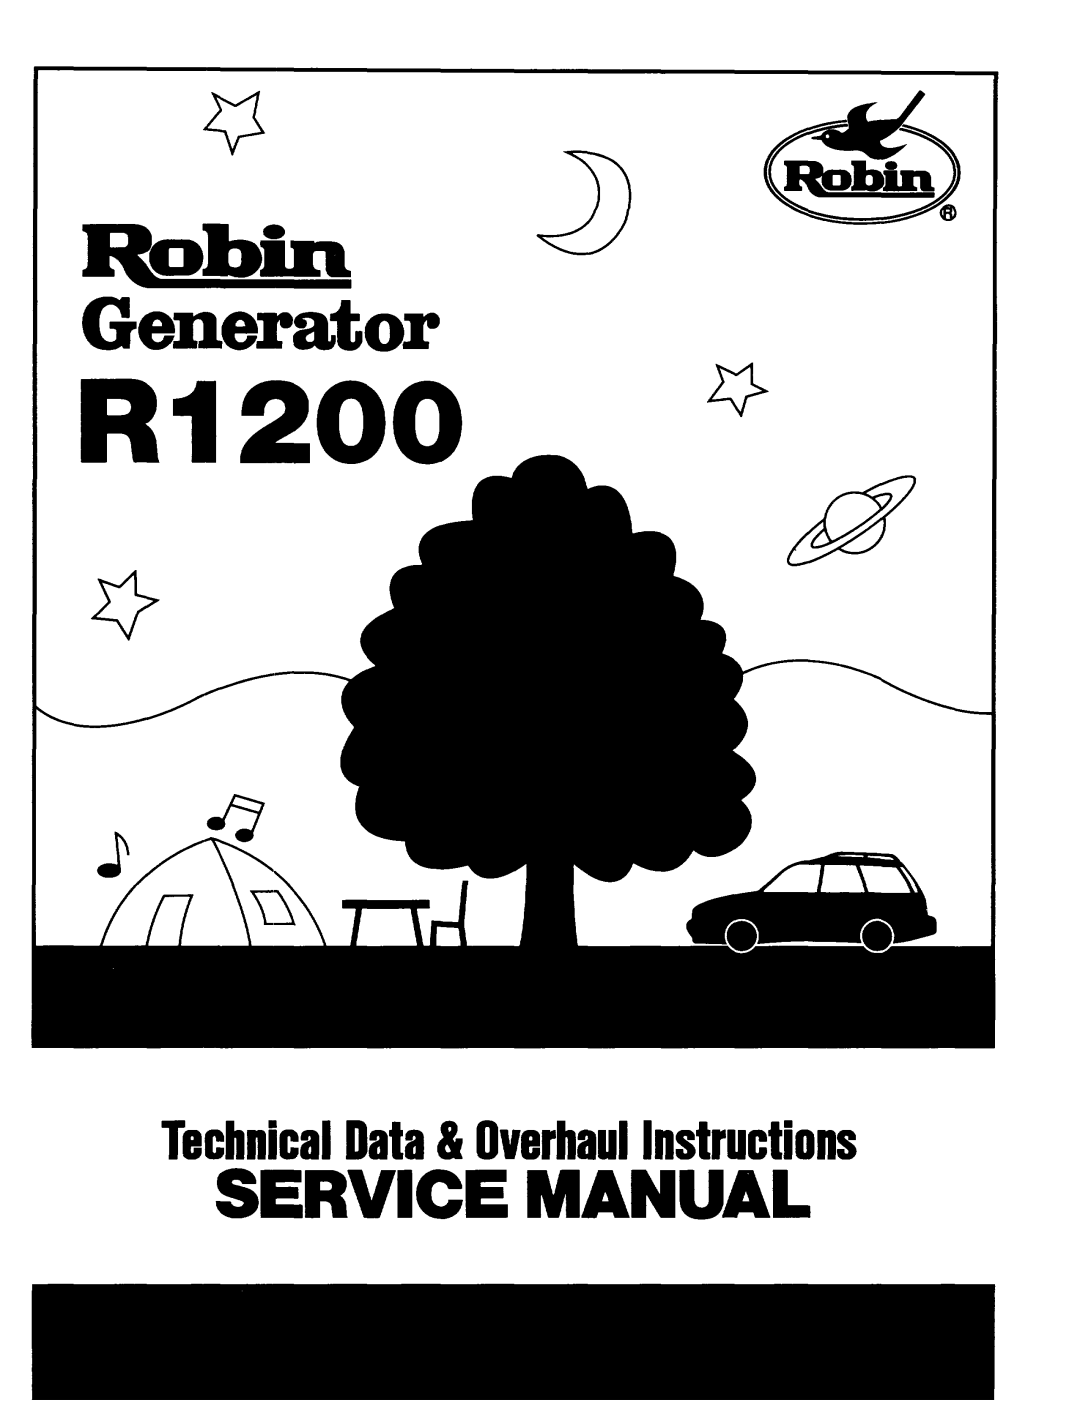 Subaru Robin Power Products R1200 service manual Rozh -J&ii, Generator, Service Manual 